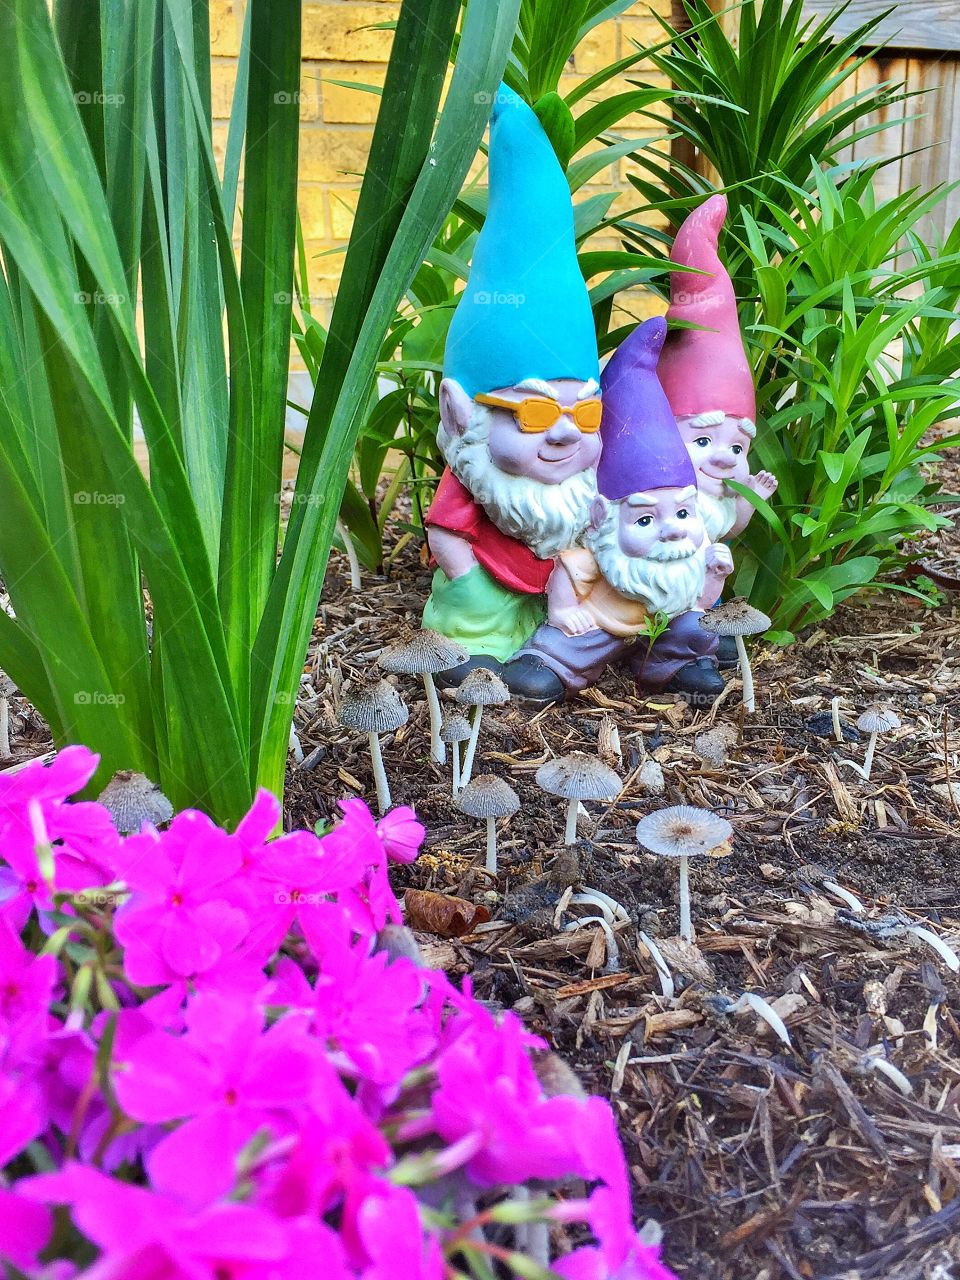 Gnomes in my garden